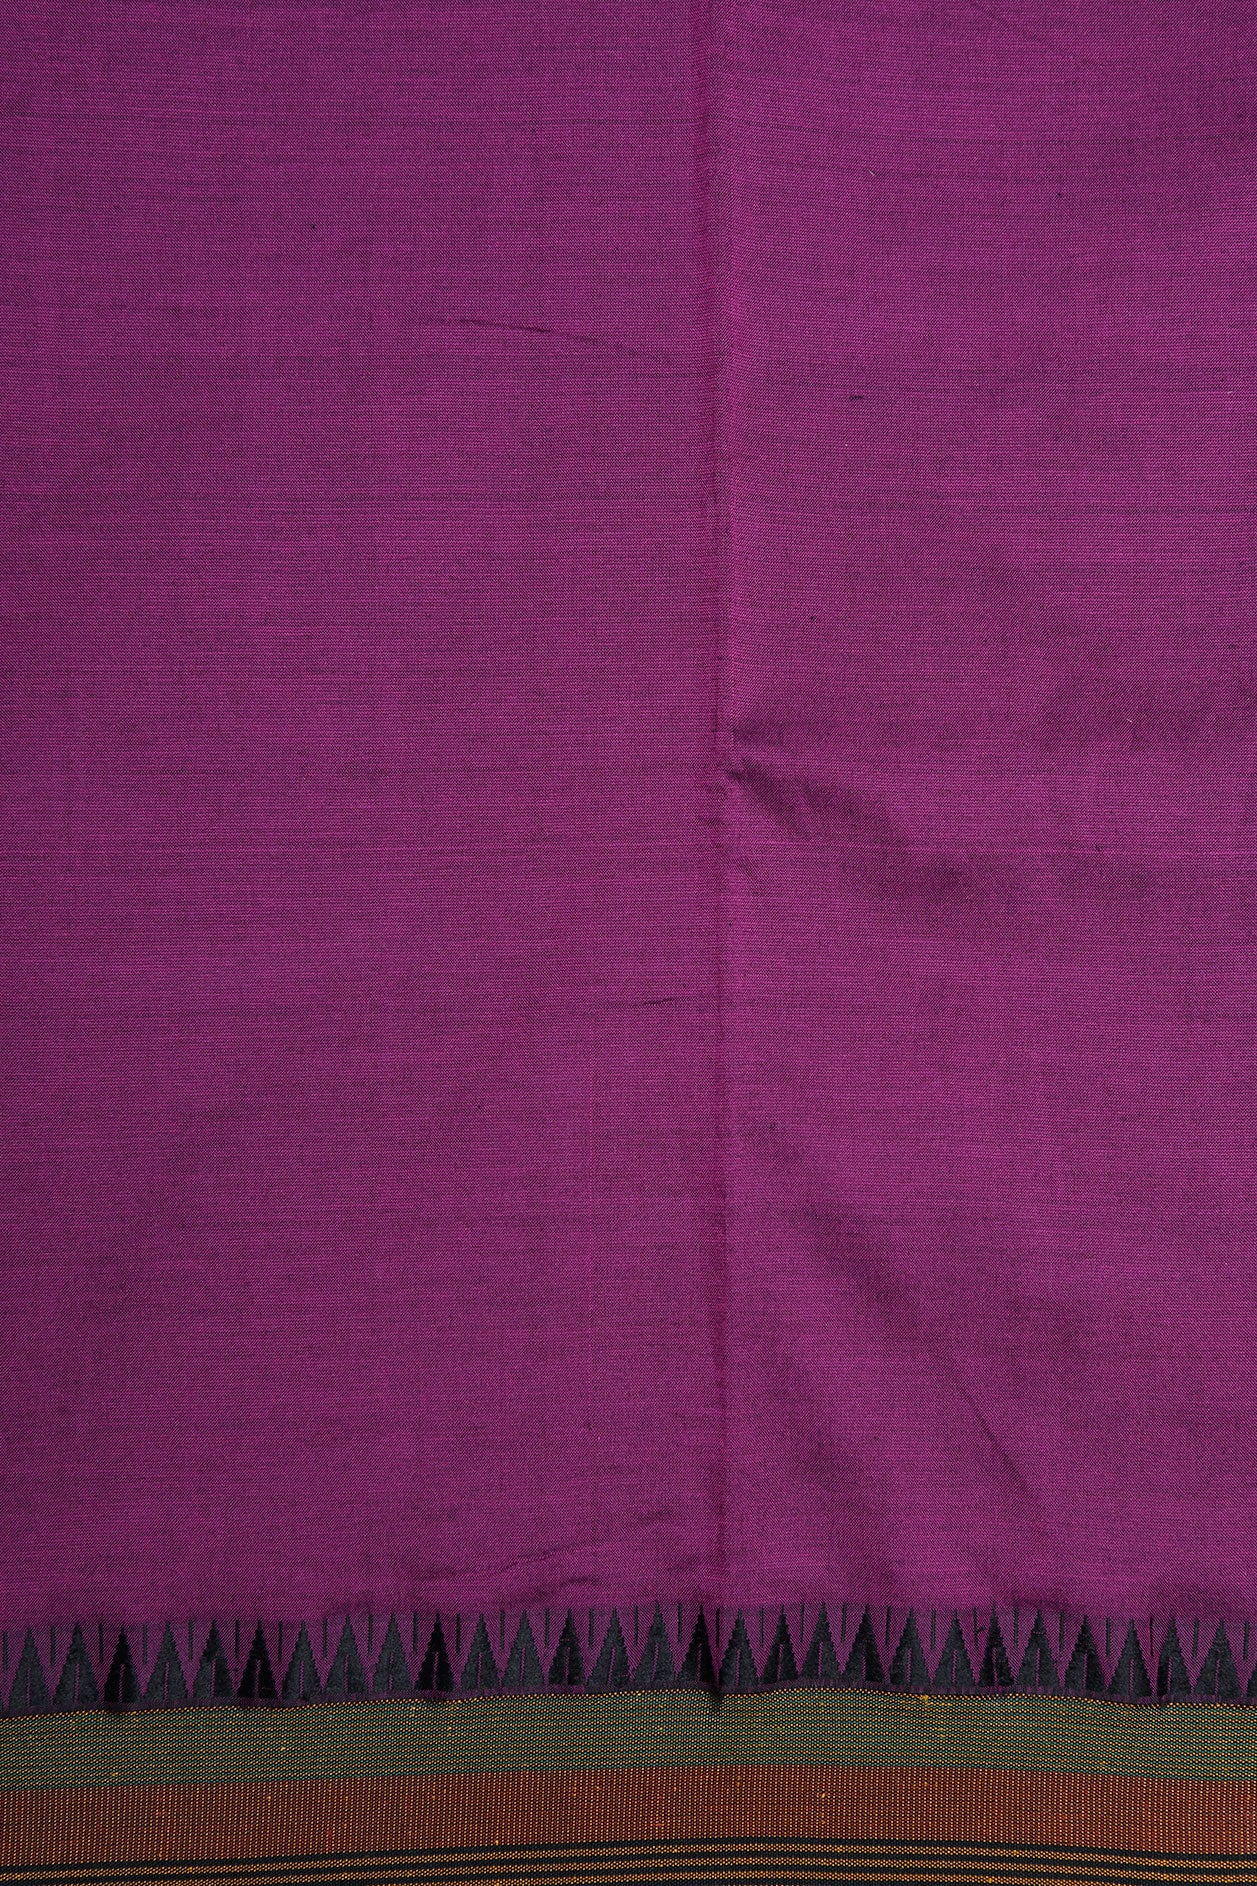 Thread Work Border In Plain Purple Dharwad Cotton Saree